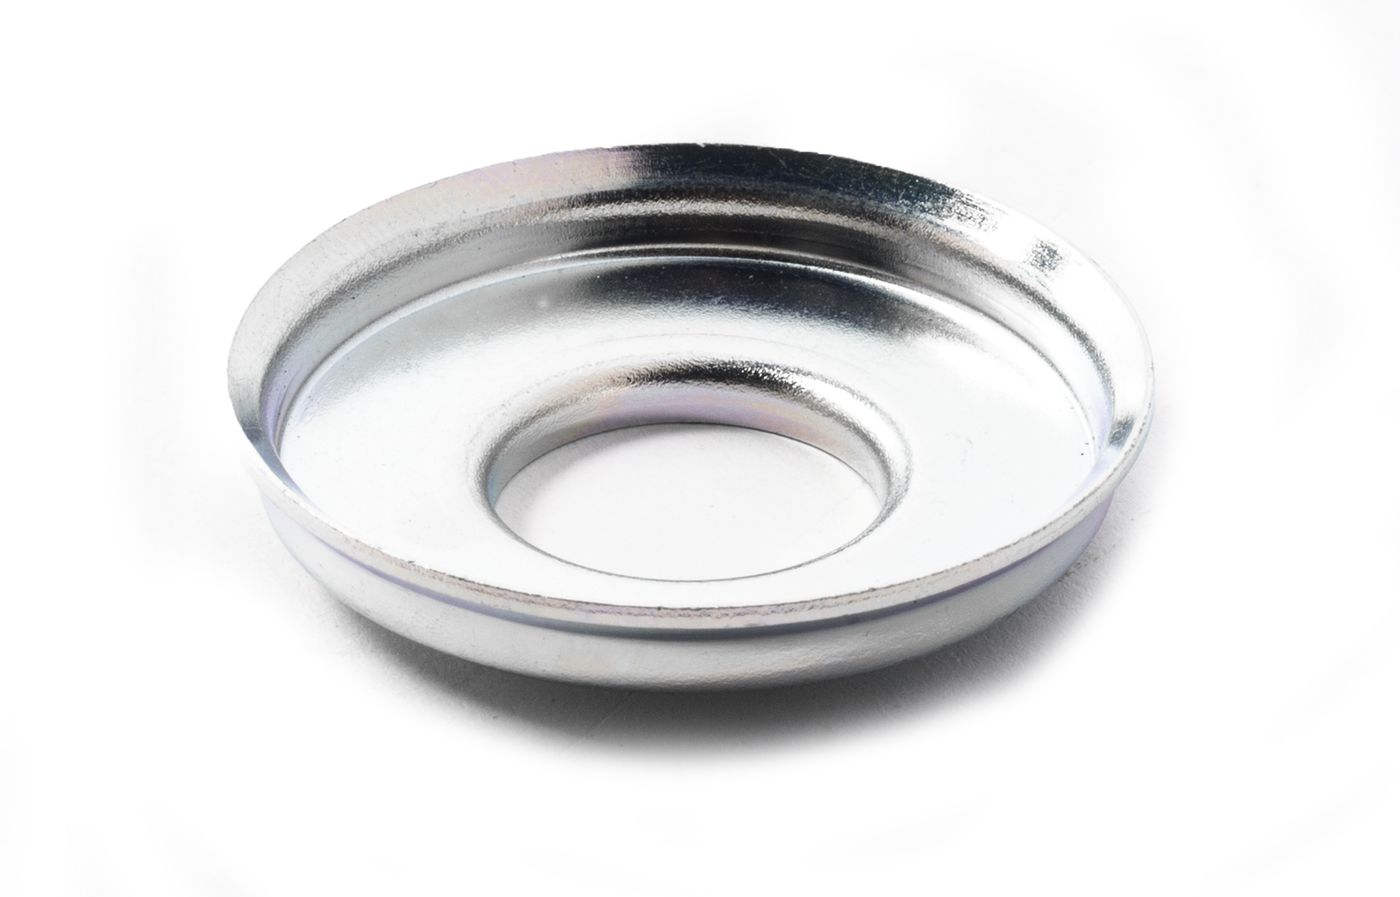 Deckscheibe
Support washer
Rondelle
Podkładka pokrywająca
Disc